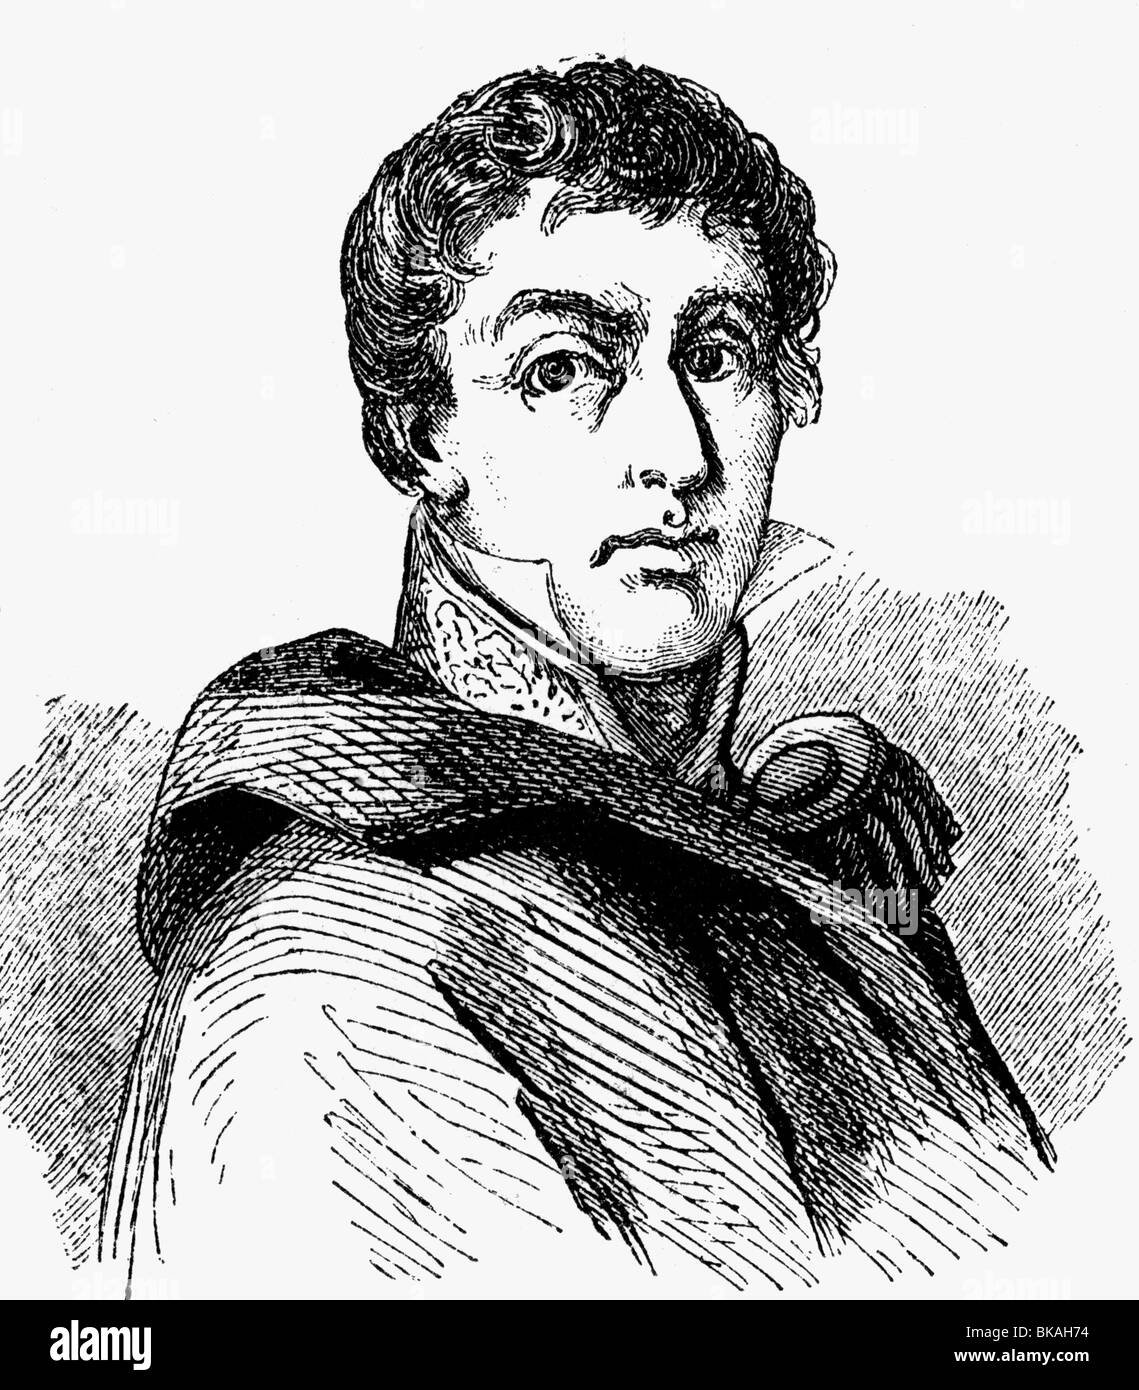 Soult, Nicolas-Jean-de-Dieu, 29.3.1769 - 26.11.1851, French general and politician, portrait, wood engraving, 19th century, , Stock Photo